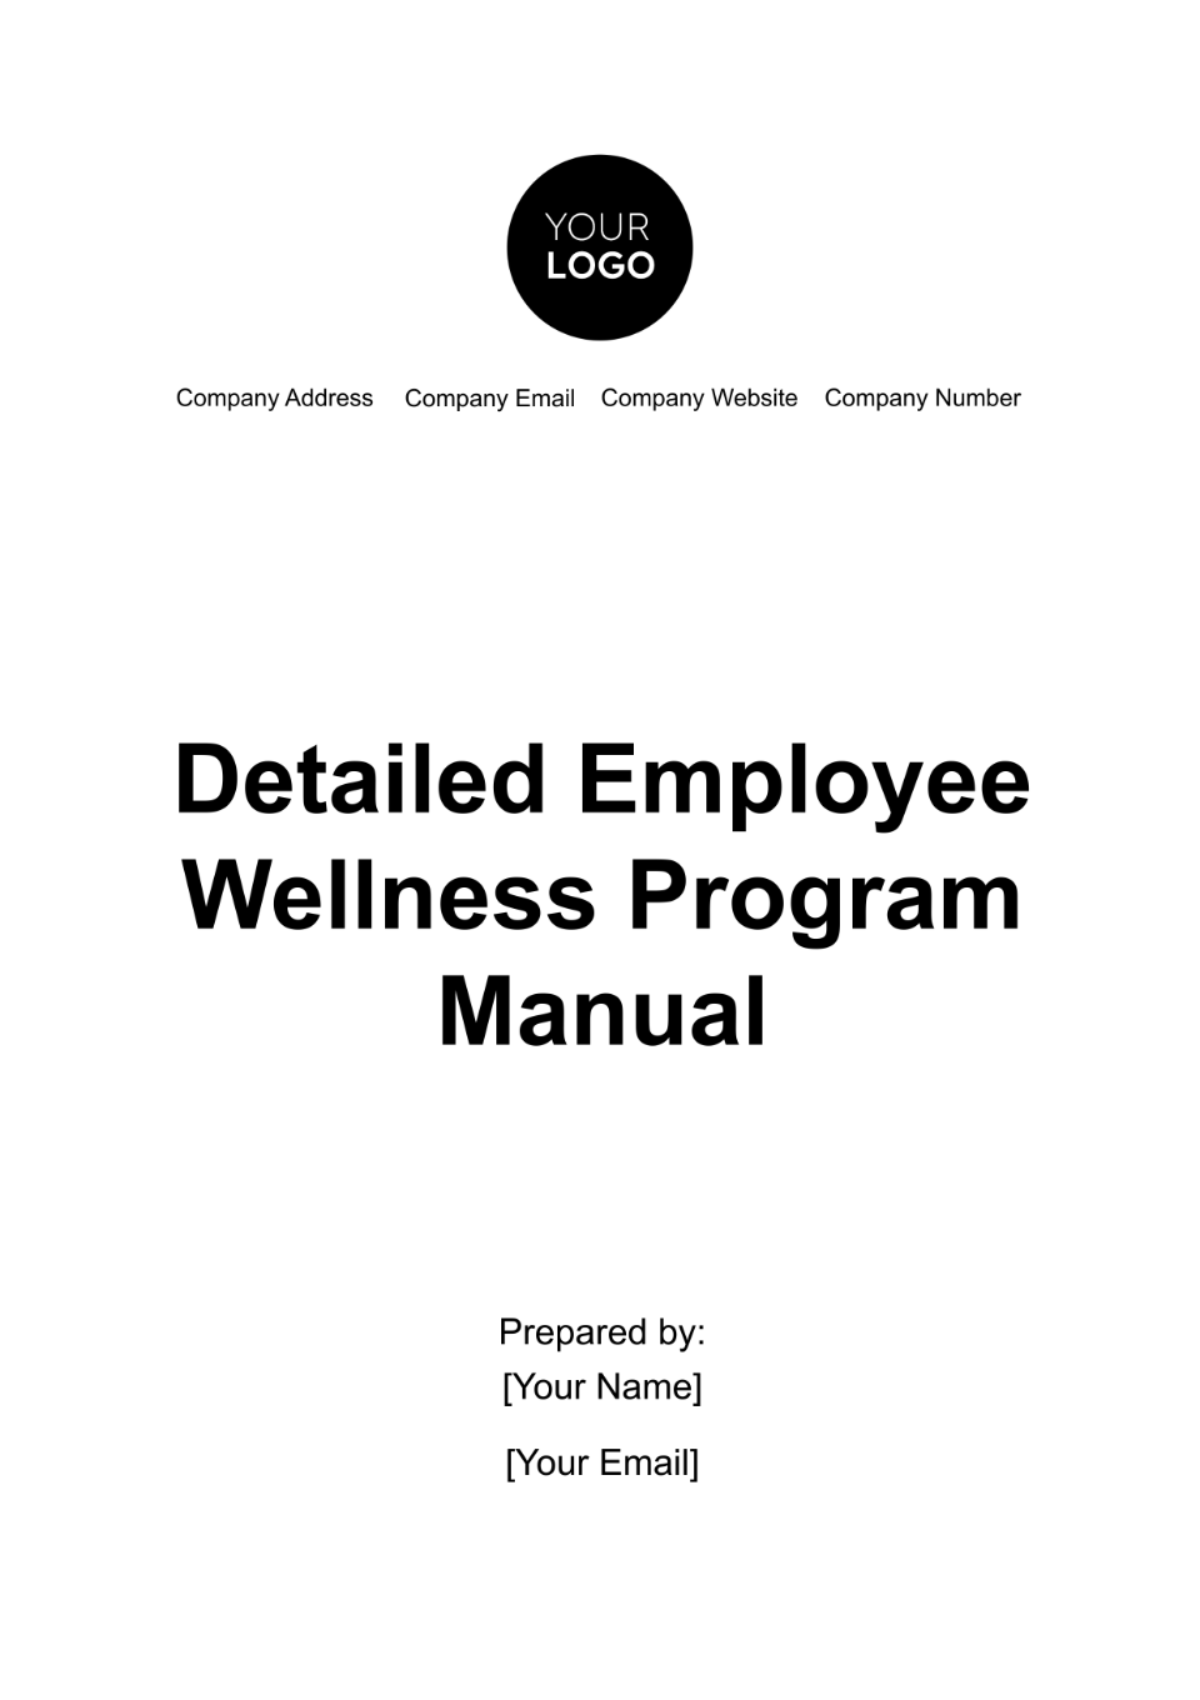 Detailed Employee Wellness Program Manual Template